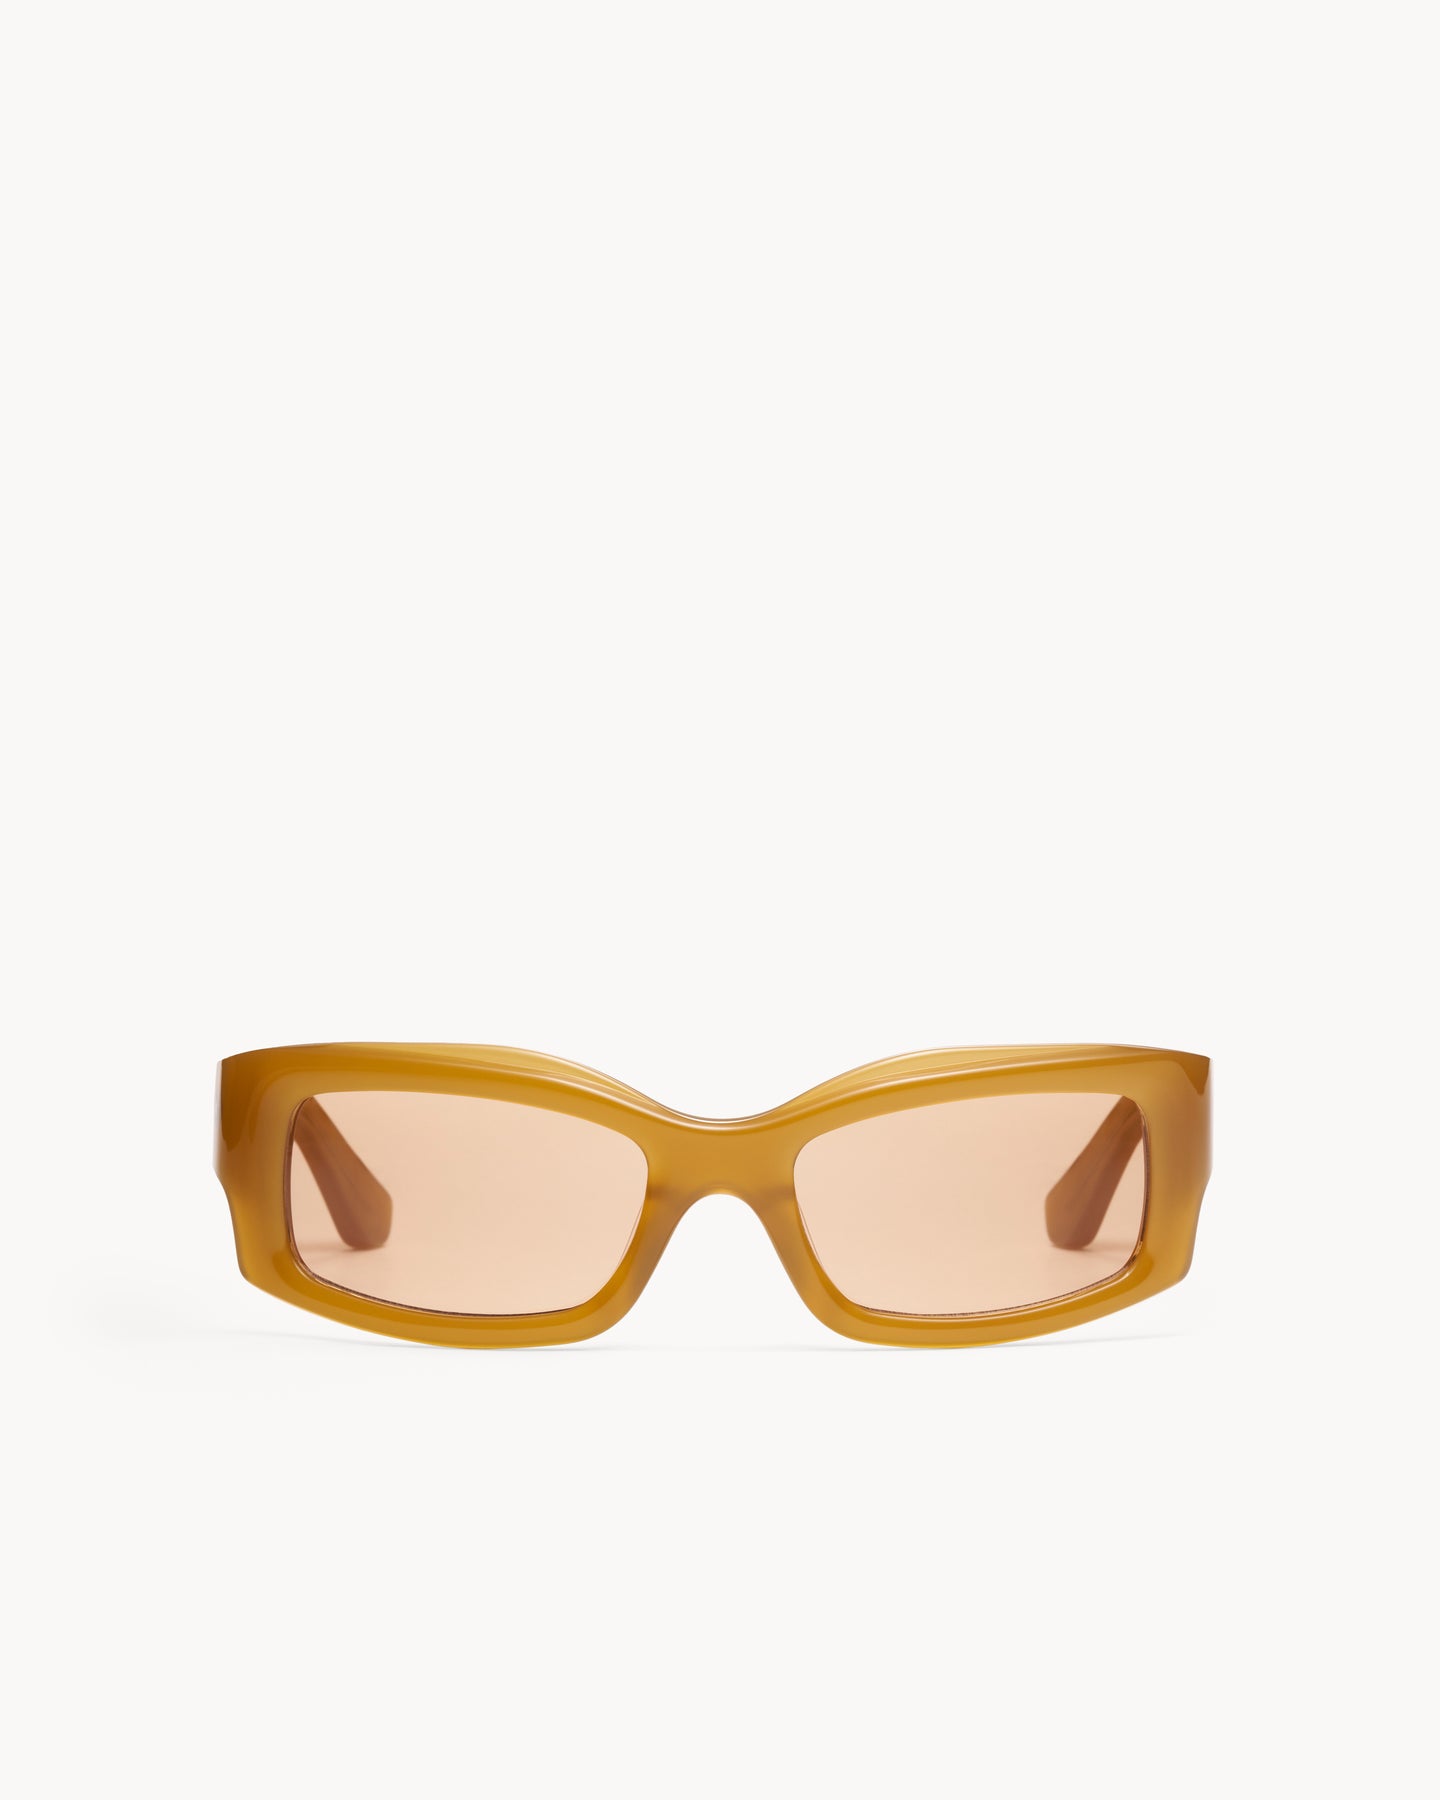 Port Tanger Addis Sunglasses in Yellow Ochra Acetate and Amber Lenses 1